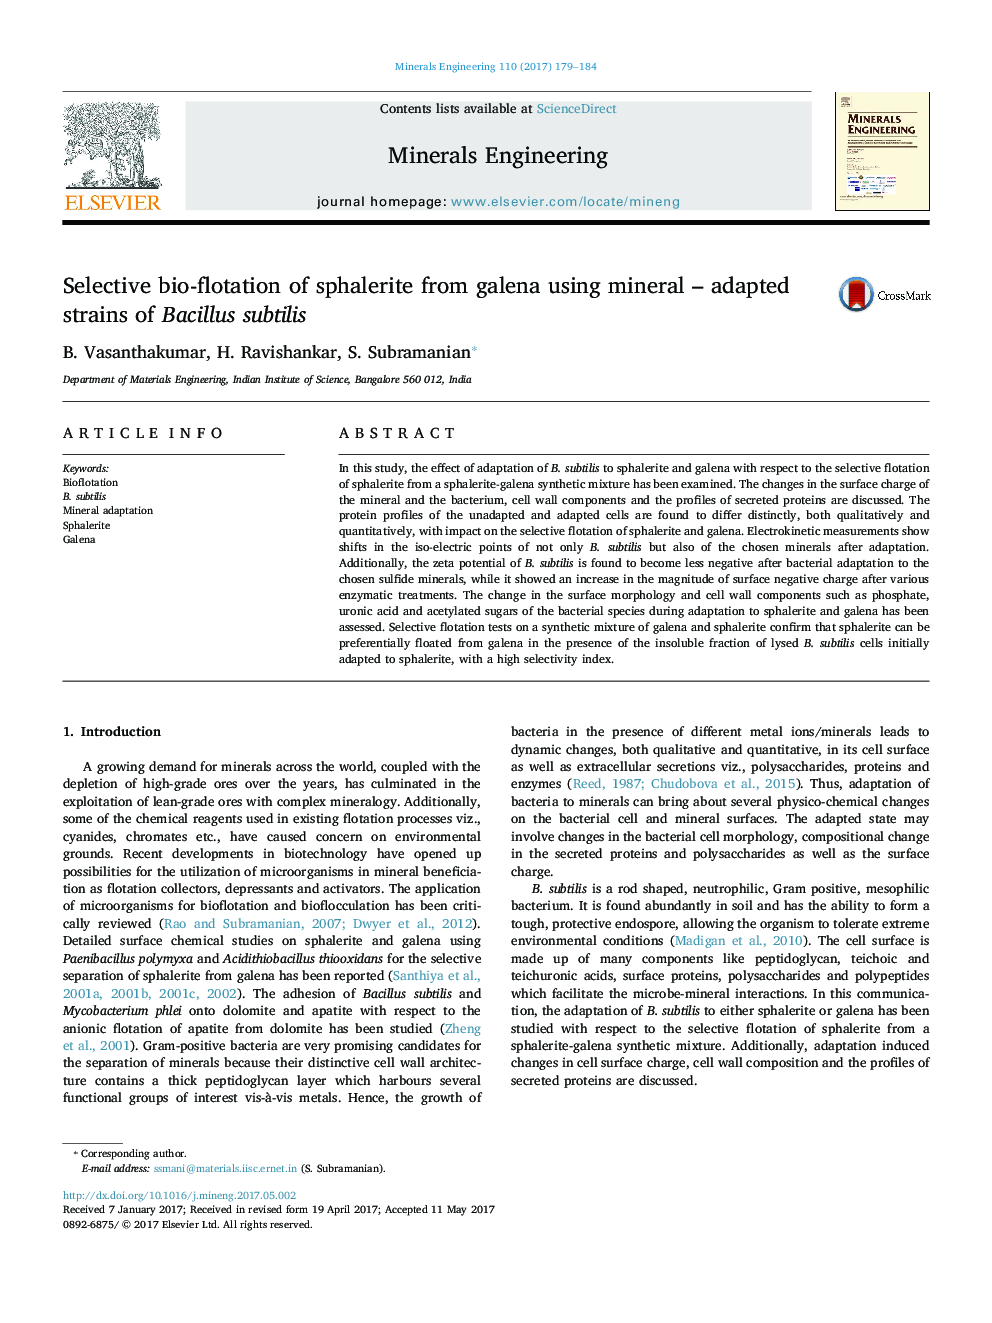 Selective bio-flotation of sphalerite from galena using mineral - adapted strains of Bacillus subtilis